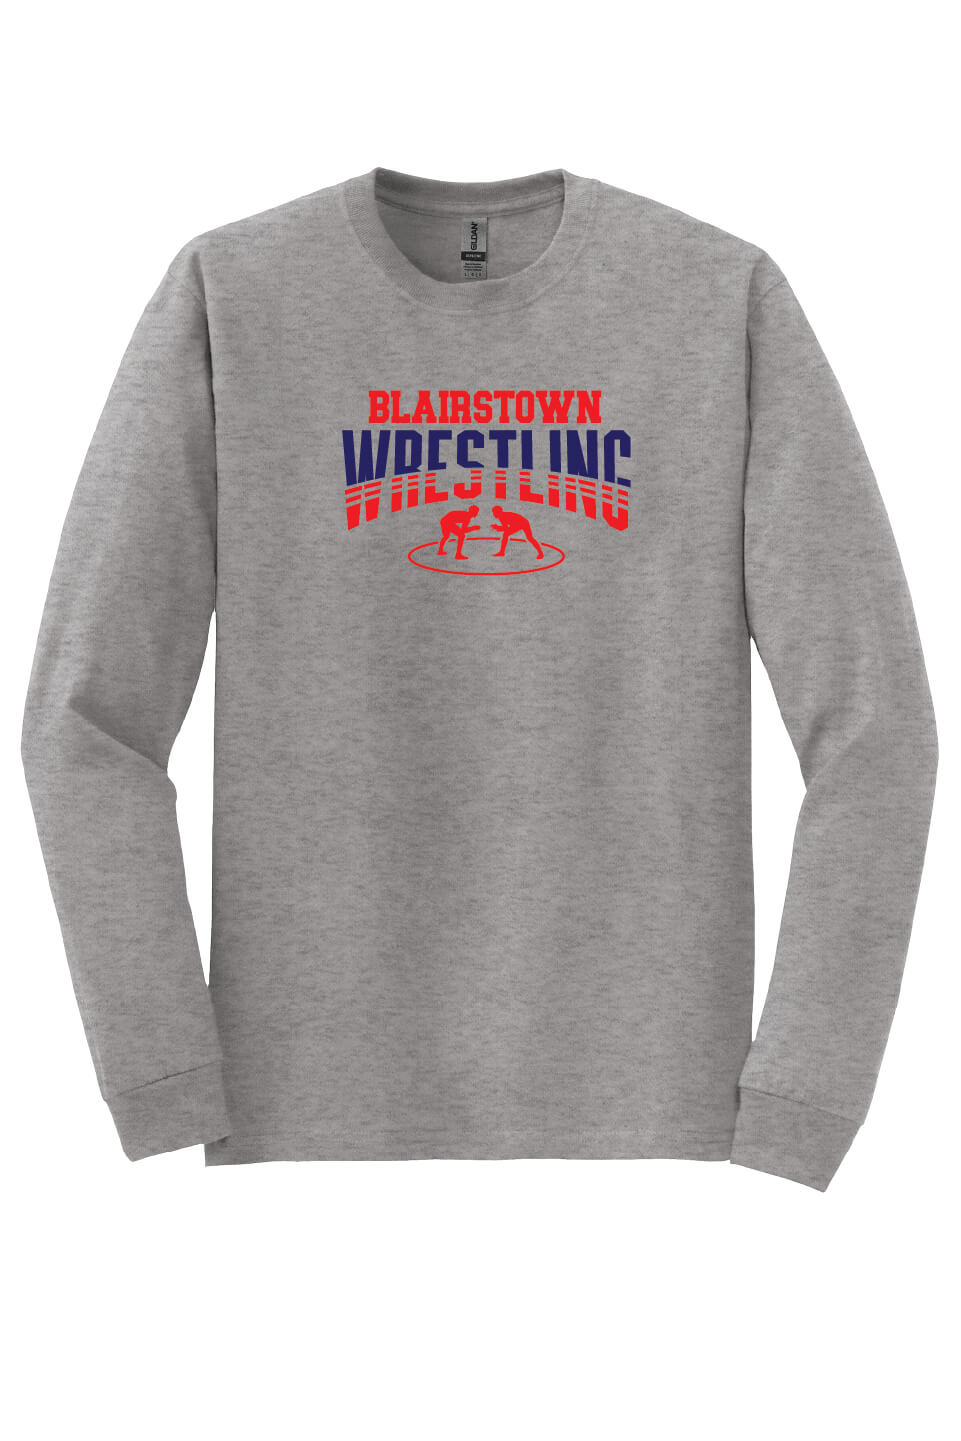 Blairstown Wrestling Long Sleeve T-Shirt gray